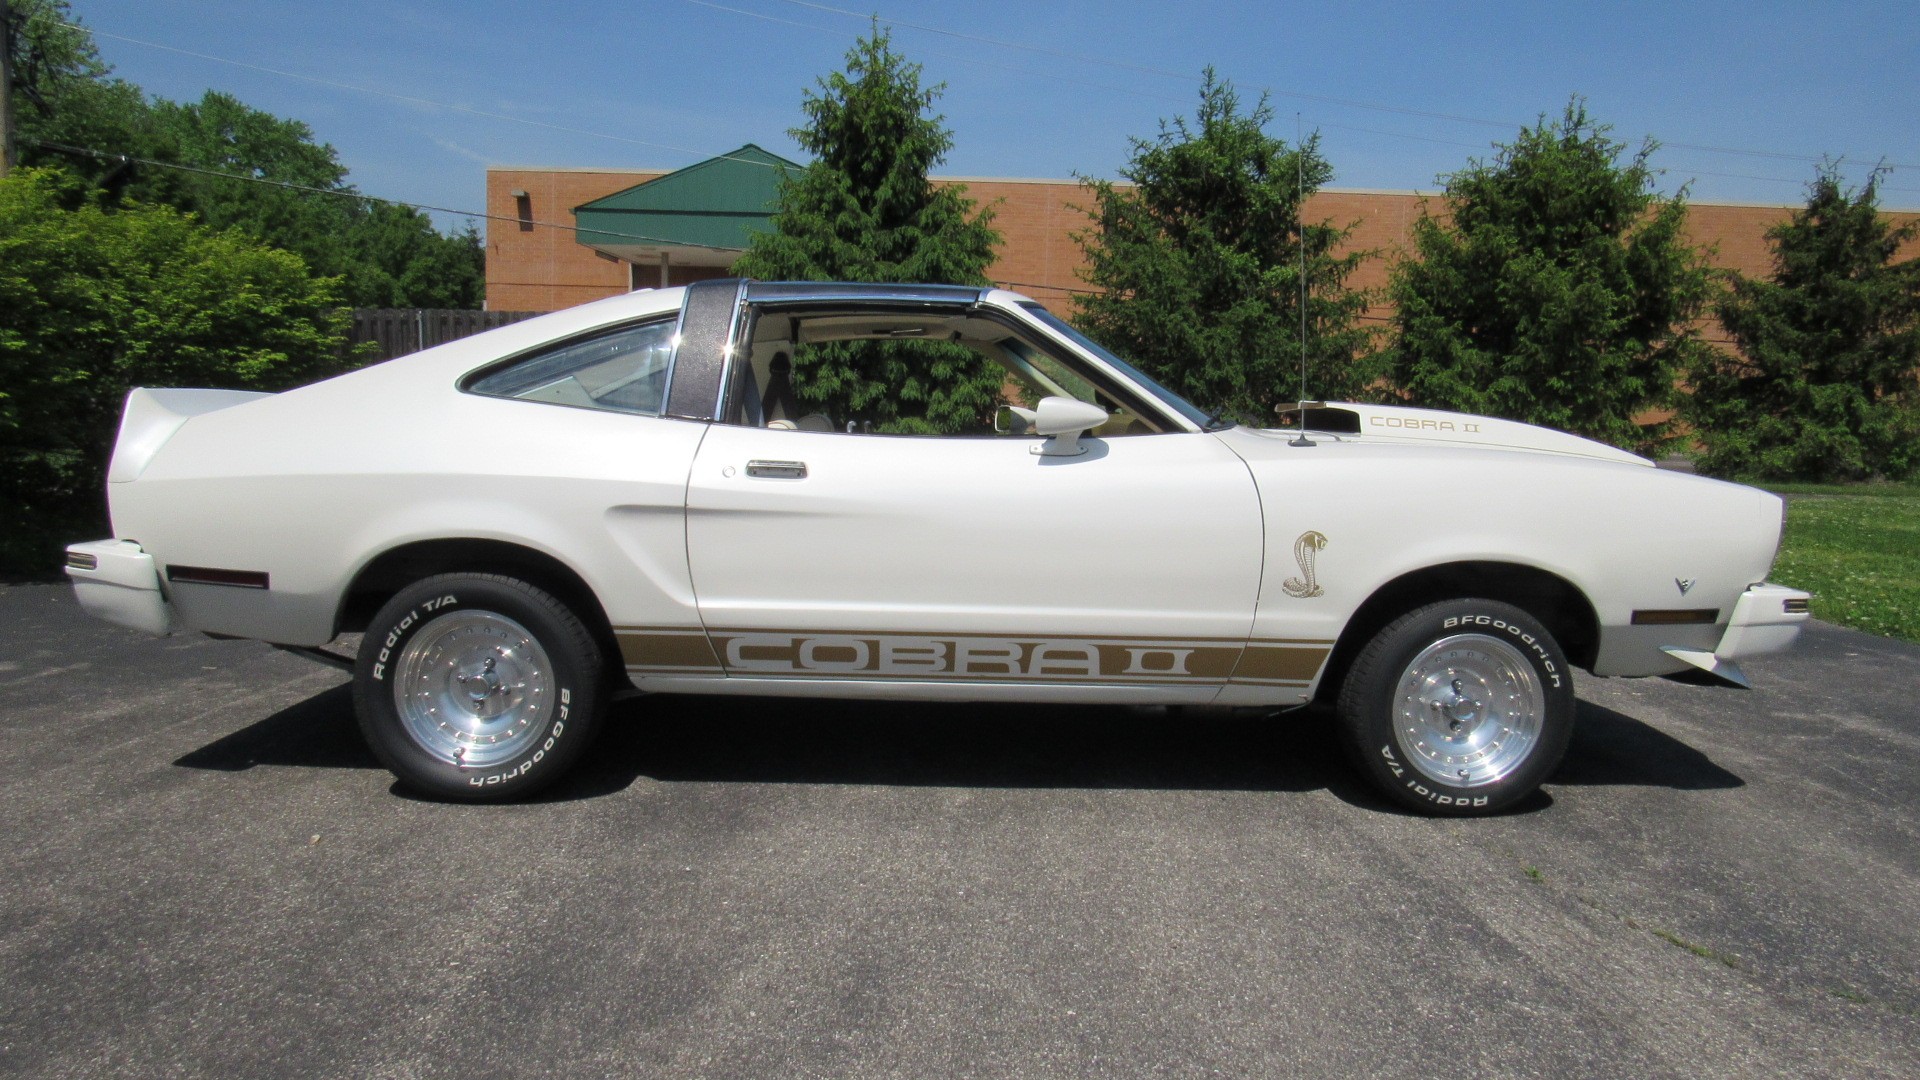 1978 Mustang, T Tops, 400 HP, SOLD!